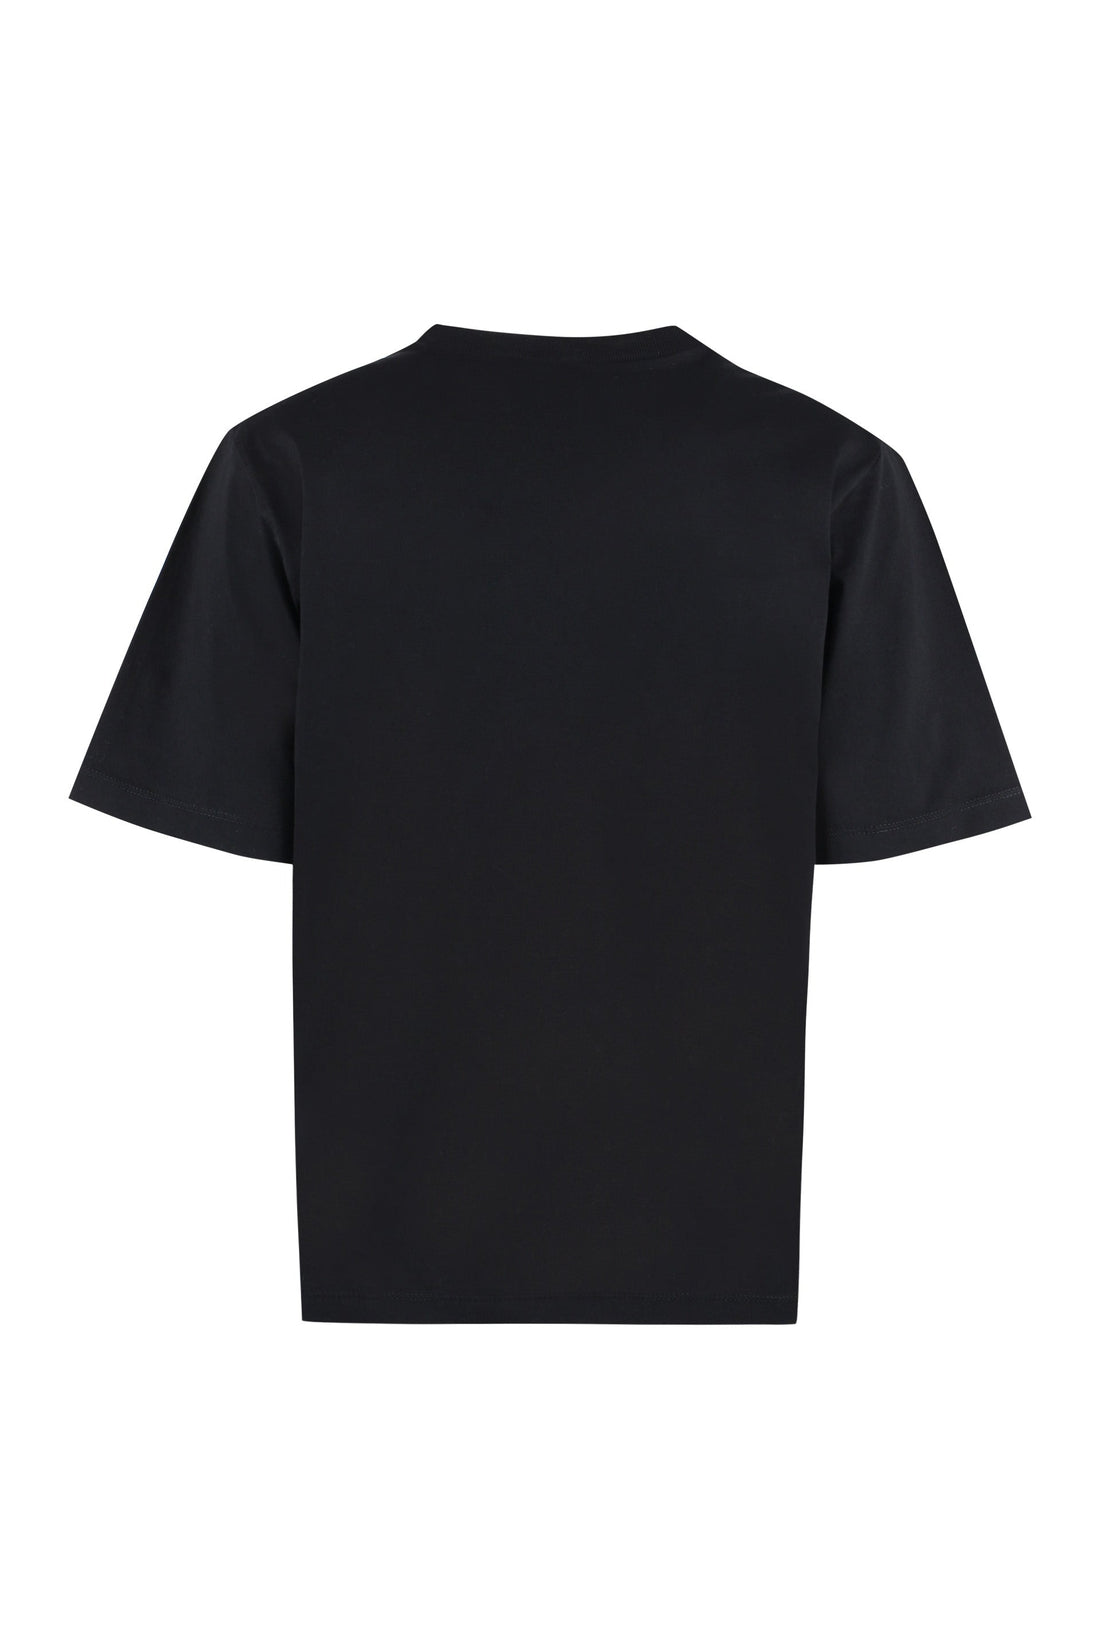 Dsquared2-OUTLET-SALE-Short sleeve printed cotton t-shirt-ARCHIVIST